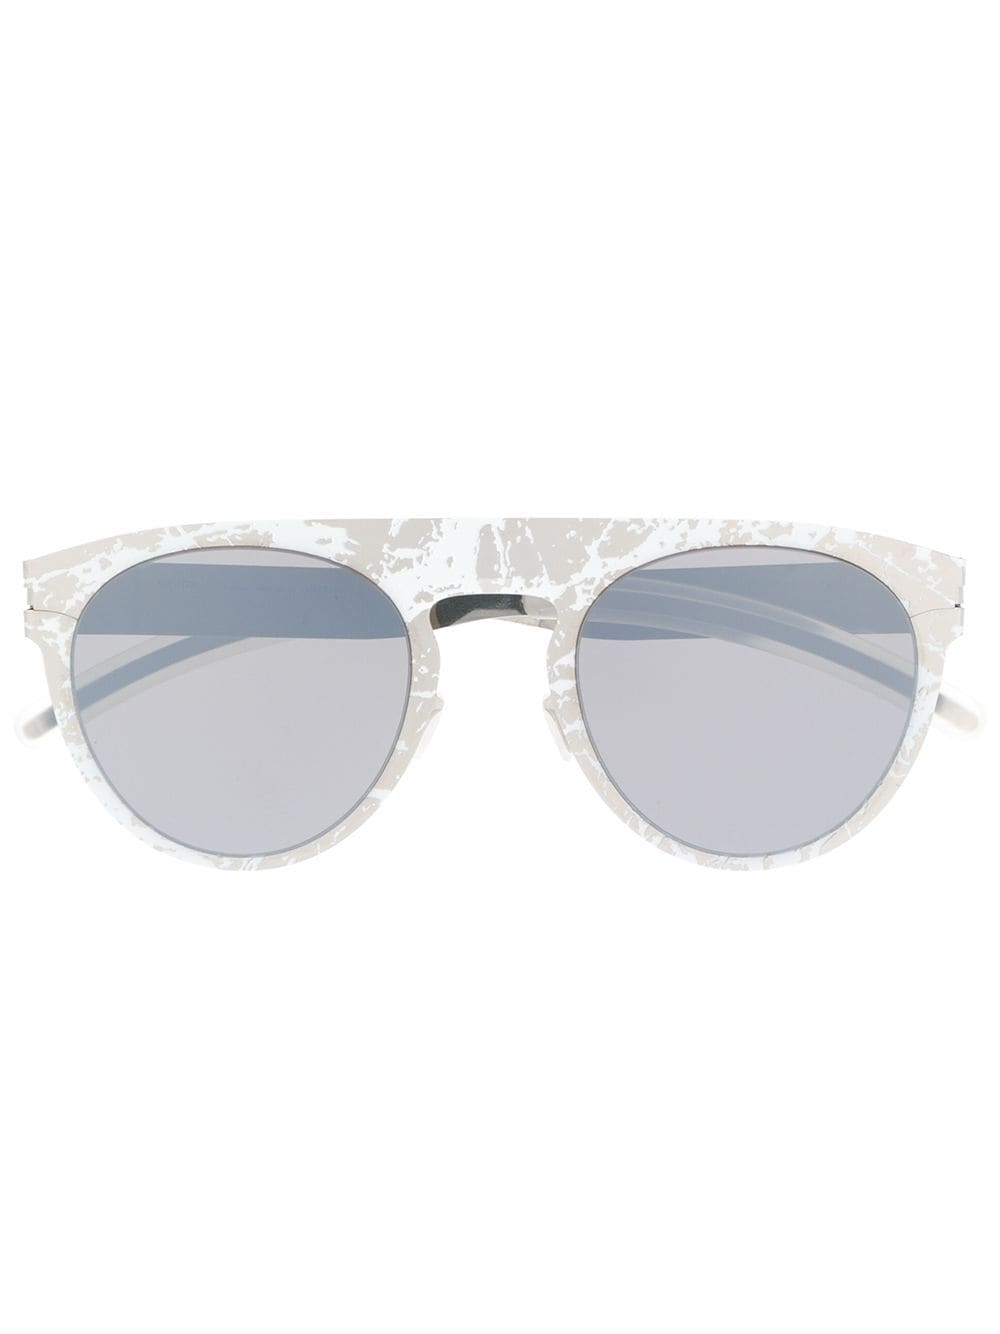 Mykita x Maison Margiela Transfer round frame sunglasses - Silver von Mykita